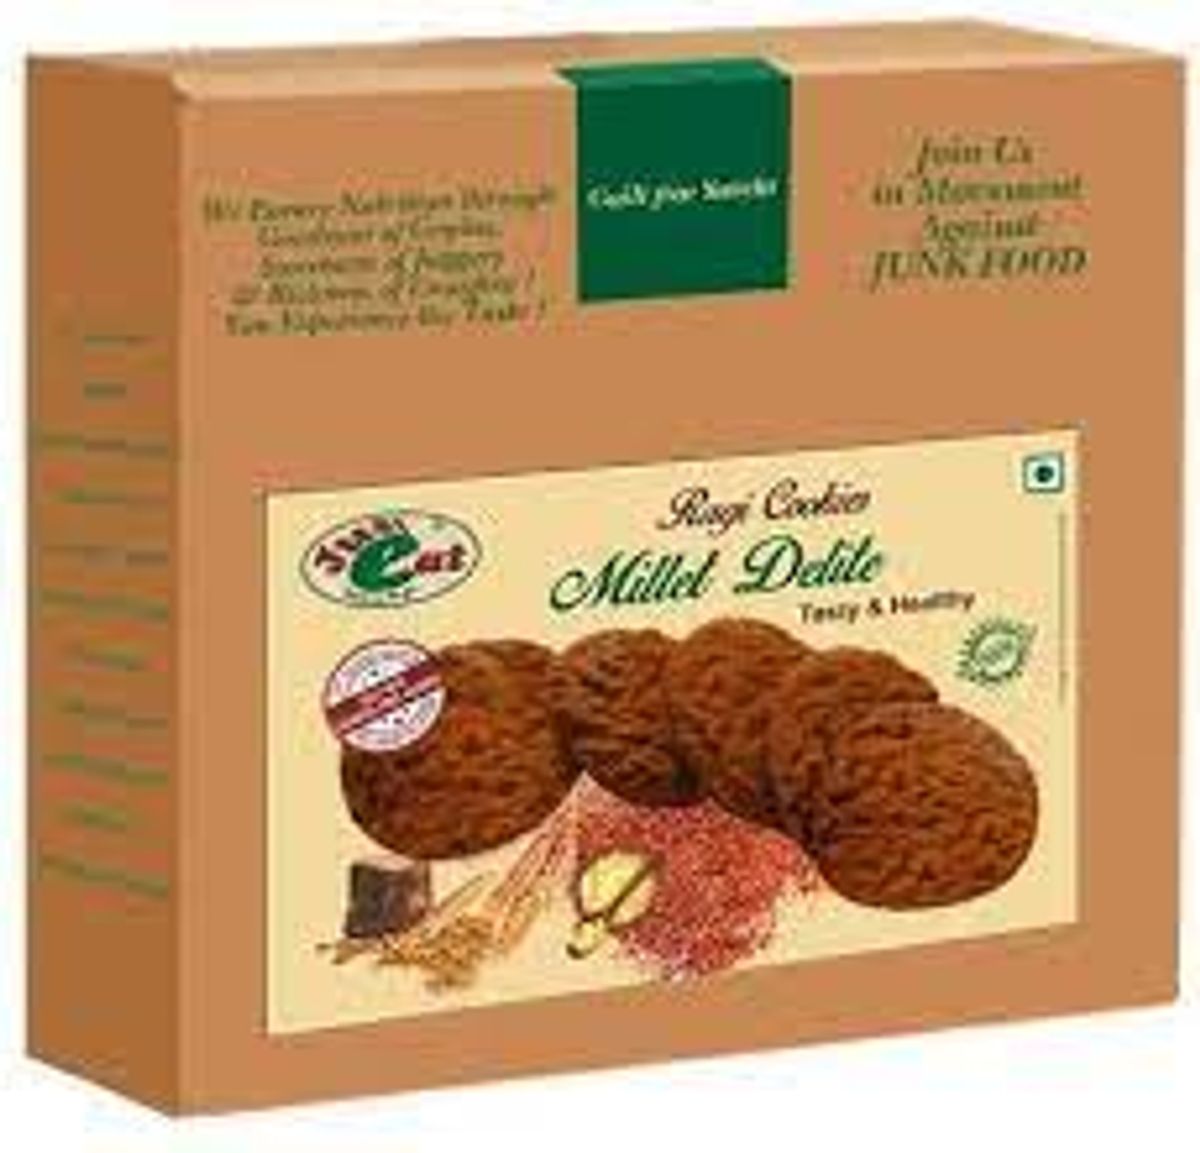 Just Eat Millet Delite Ragi Cookies Image